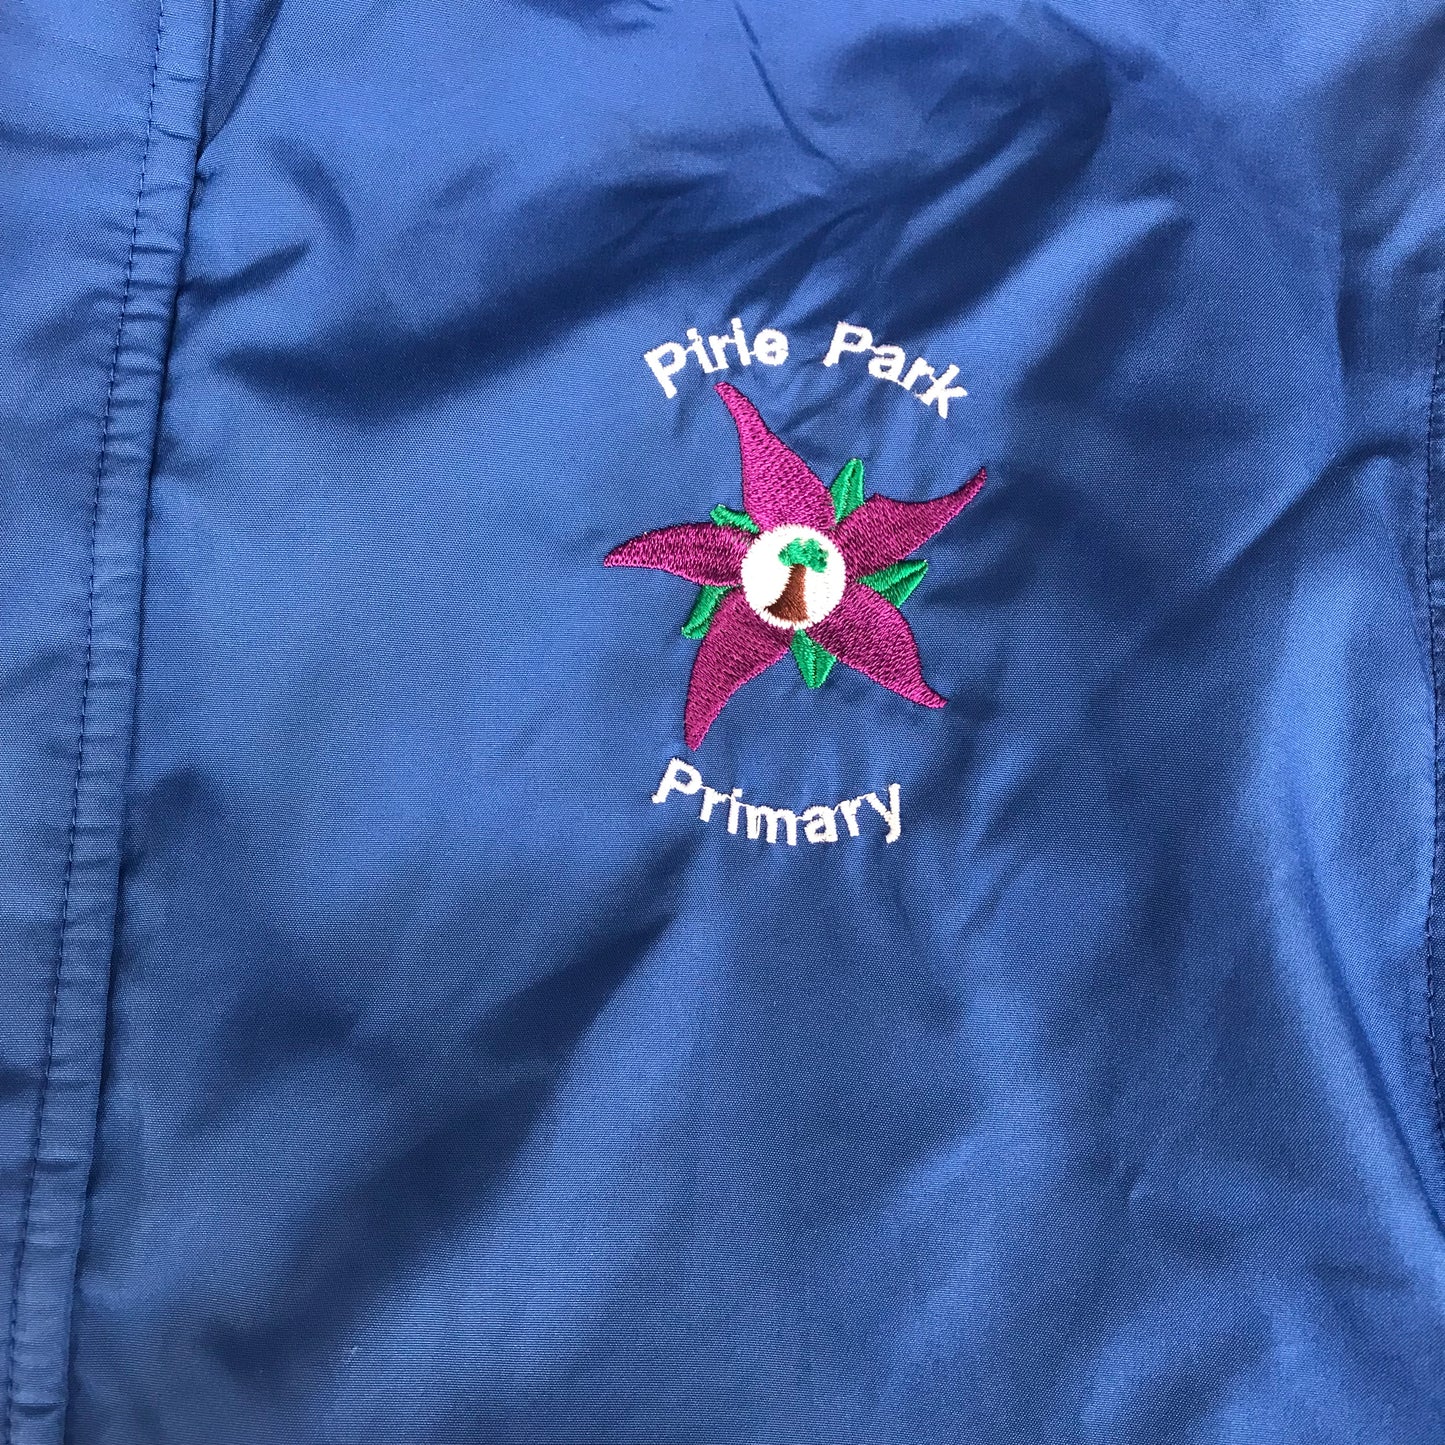 Pirie Park Royal Blue Fleece lined Jacket